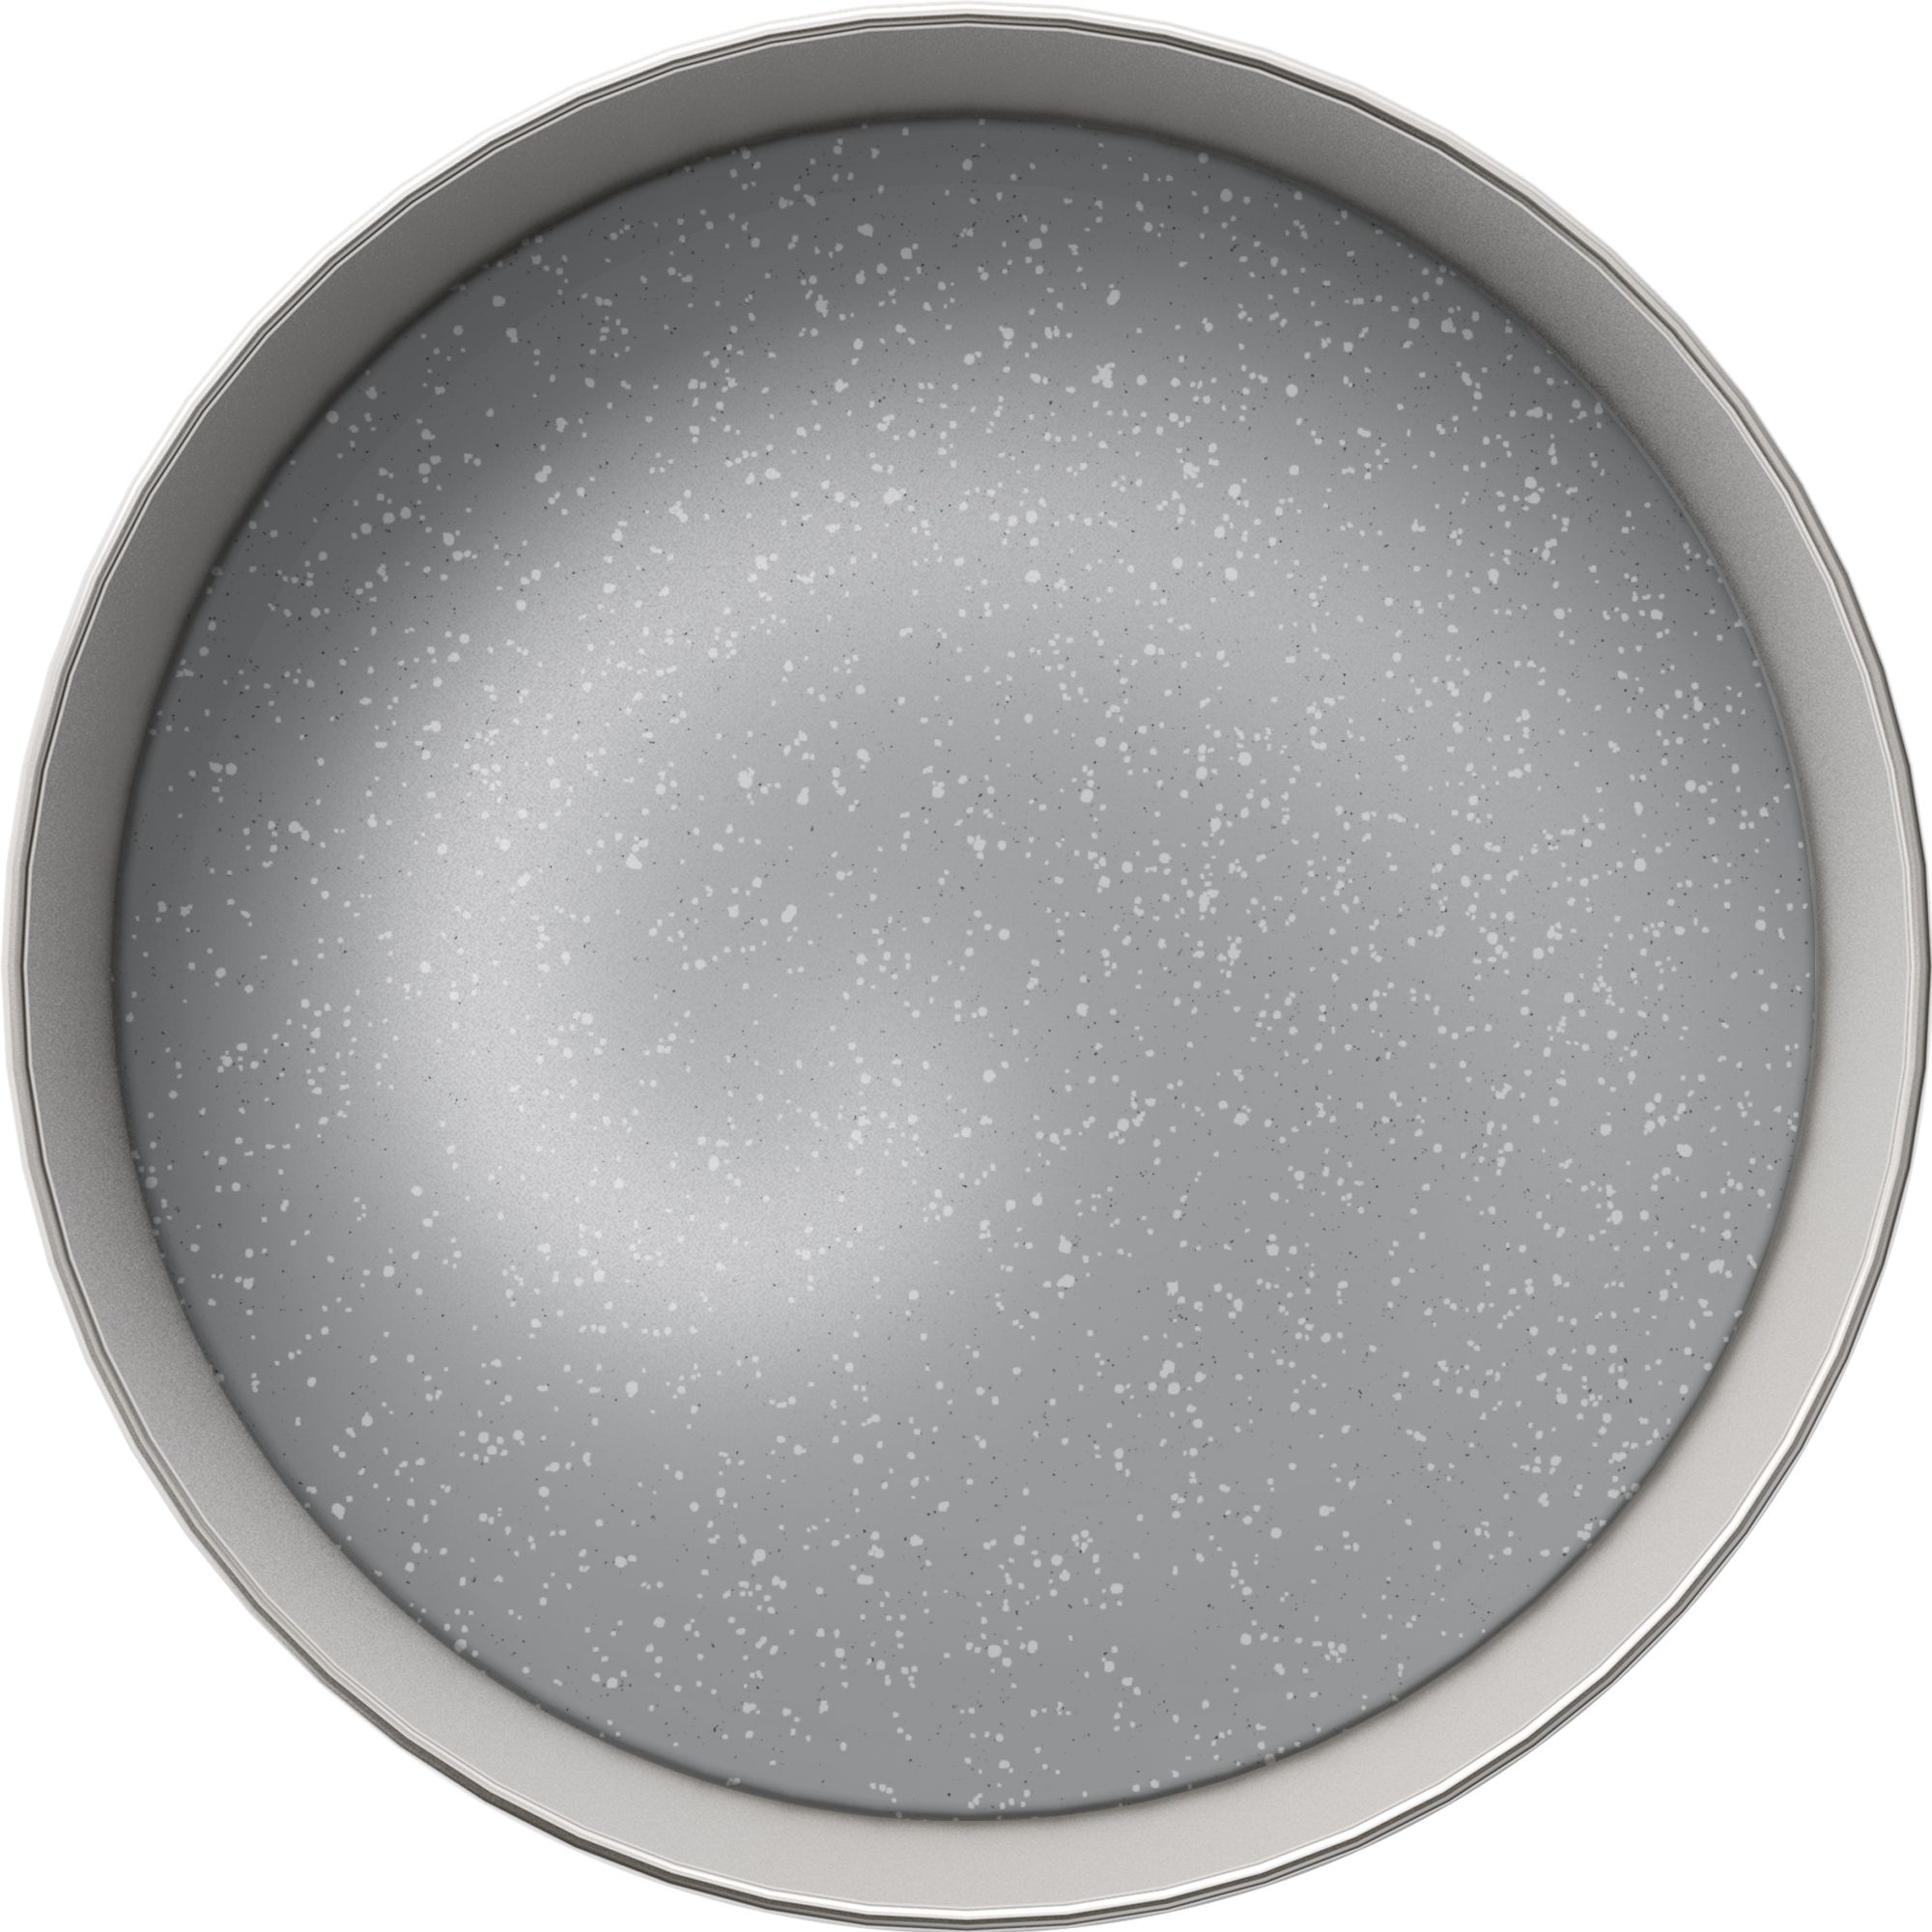 GoodHome Silver effect Furniture Paint Glitter Pot, 50g